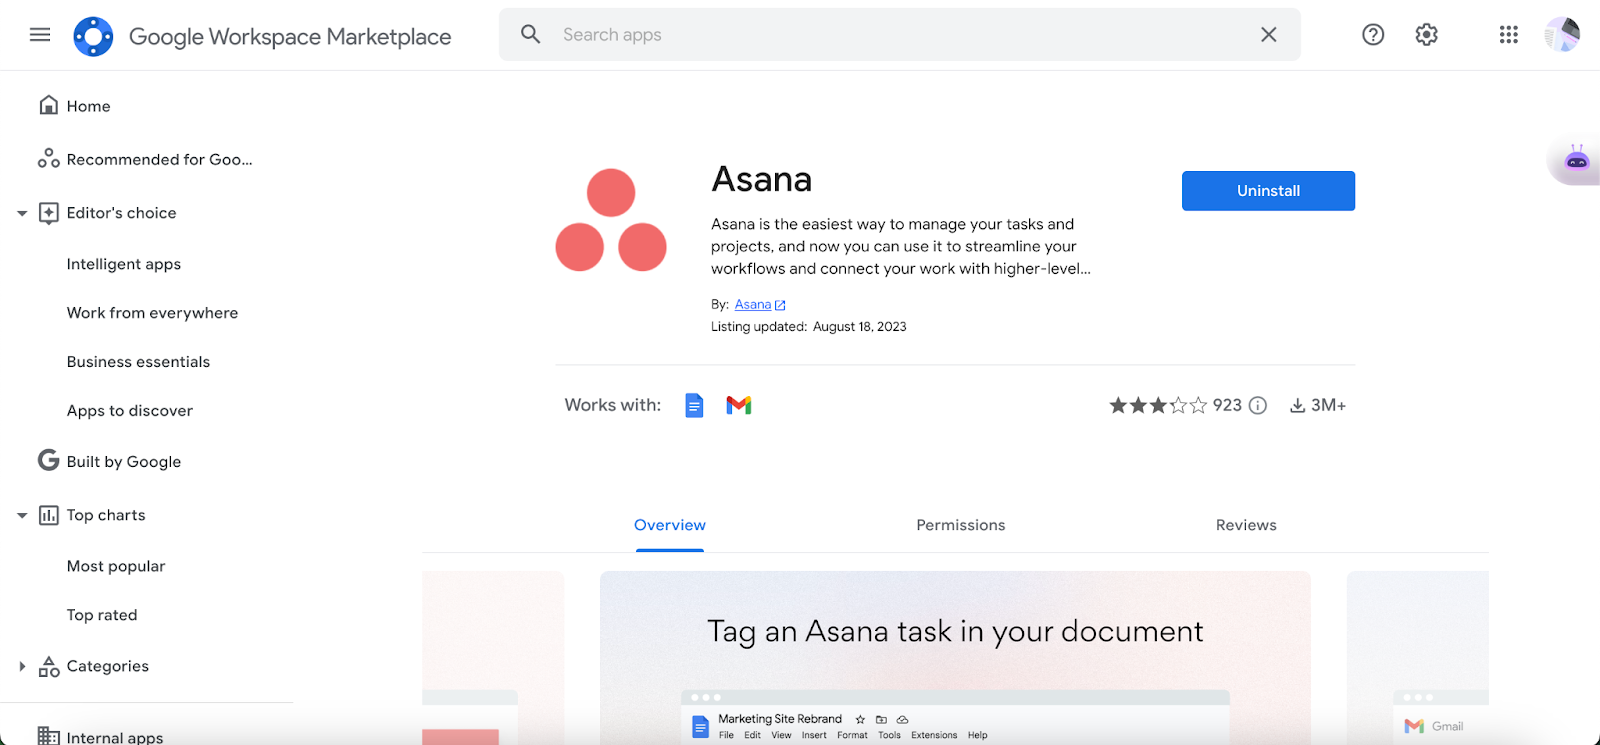 Google Docs integrations - Asana on Google Workspace Marketplace